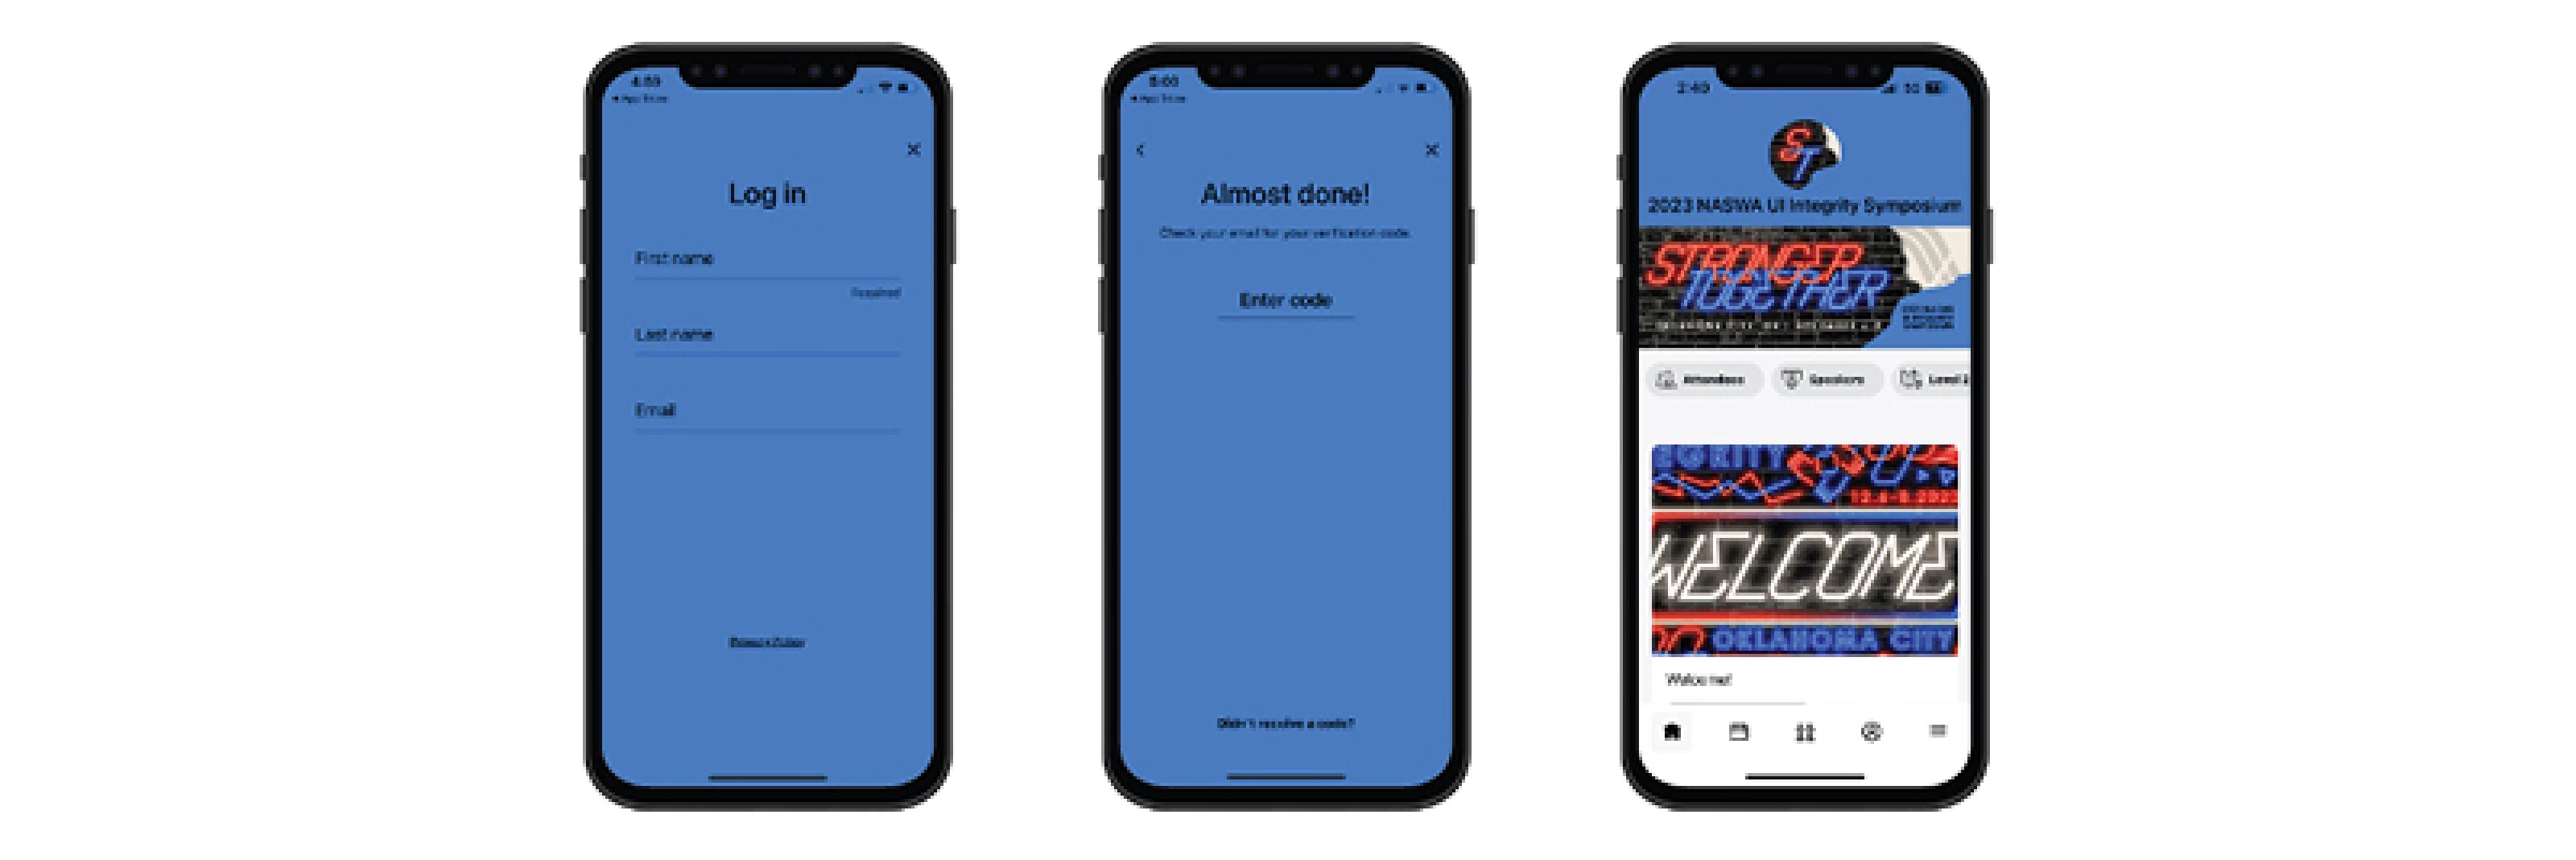 App Instruction Screenshots and Phone Mock-ups